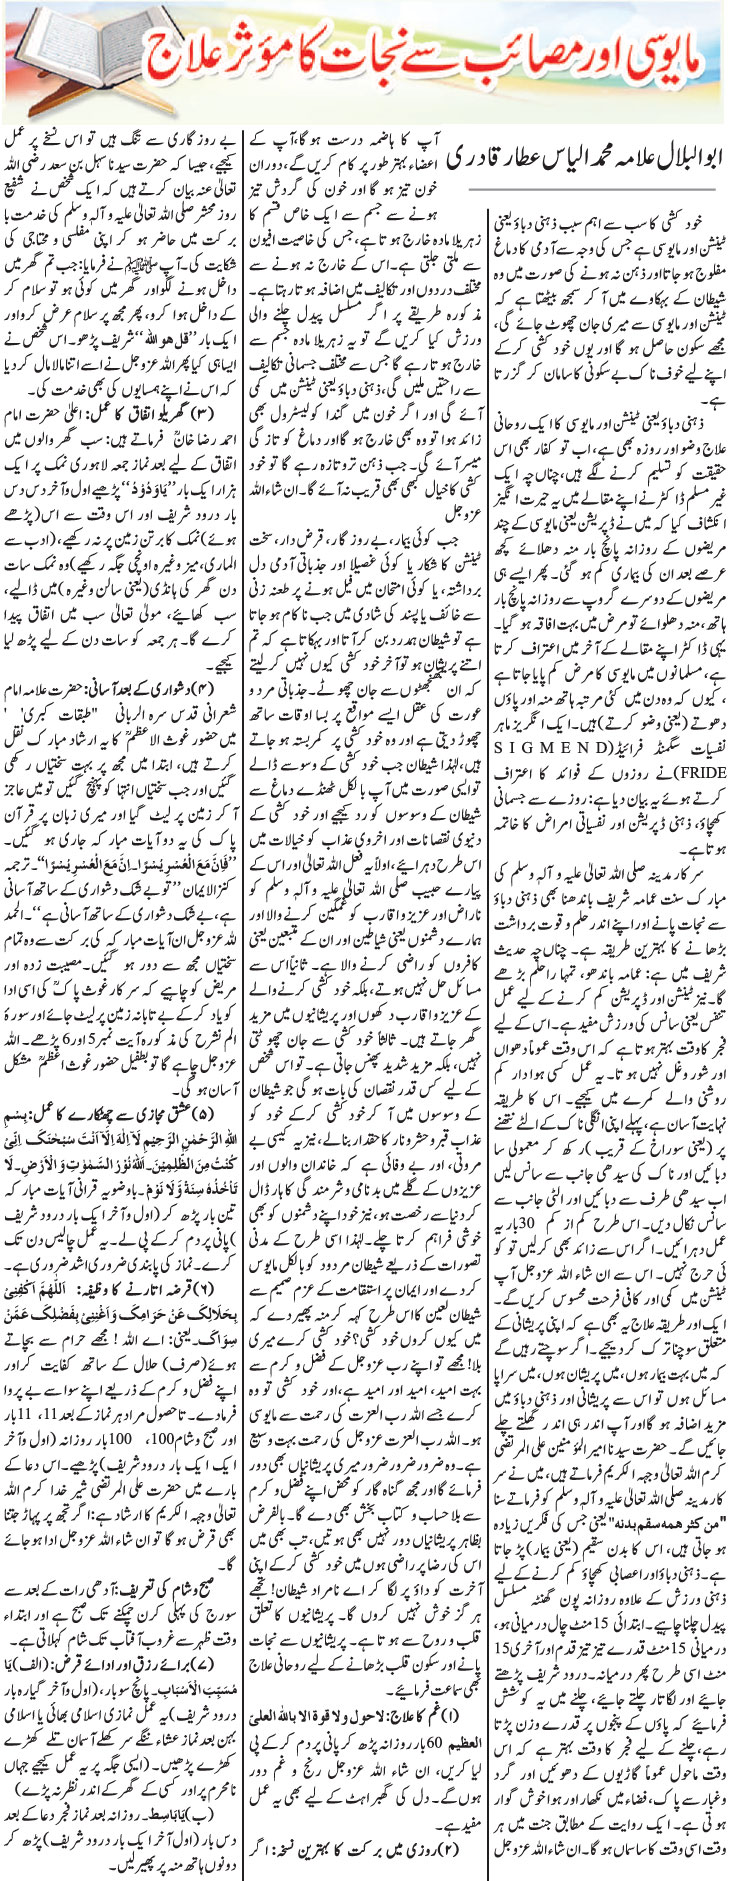 Spiritual Treatment of Depression & Psychological Problems in Urdu & English 